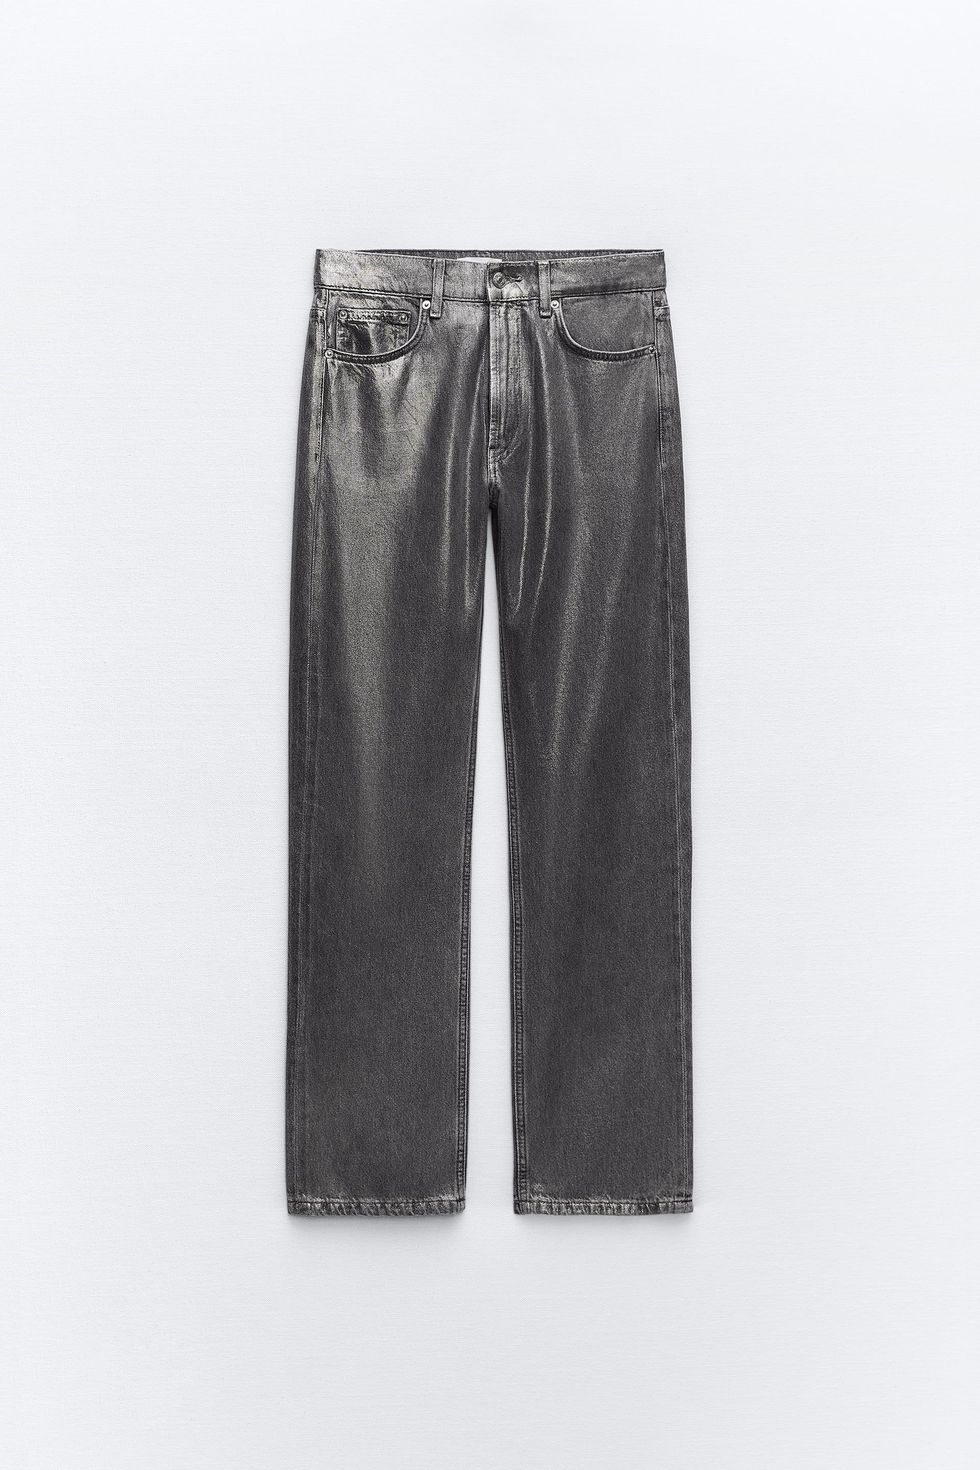 Pantalón gris metalizado